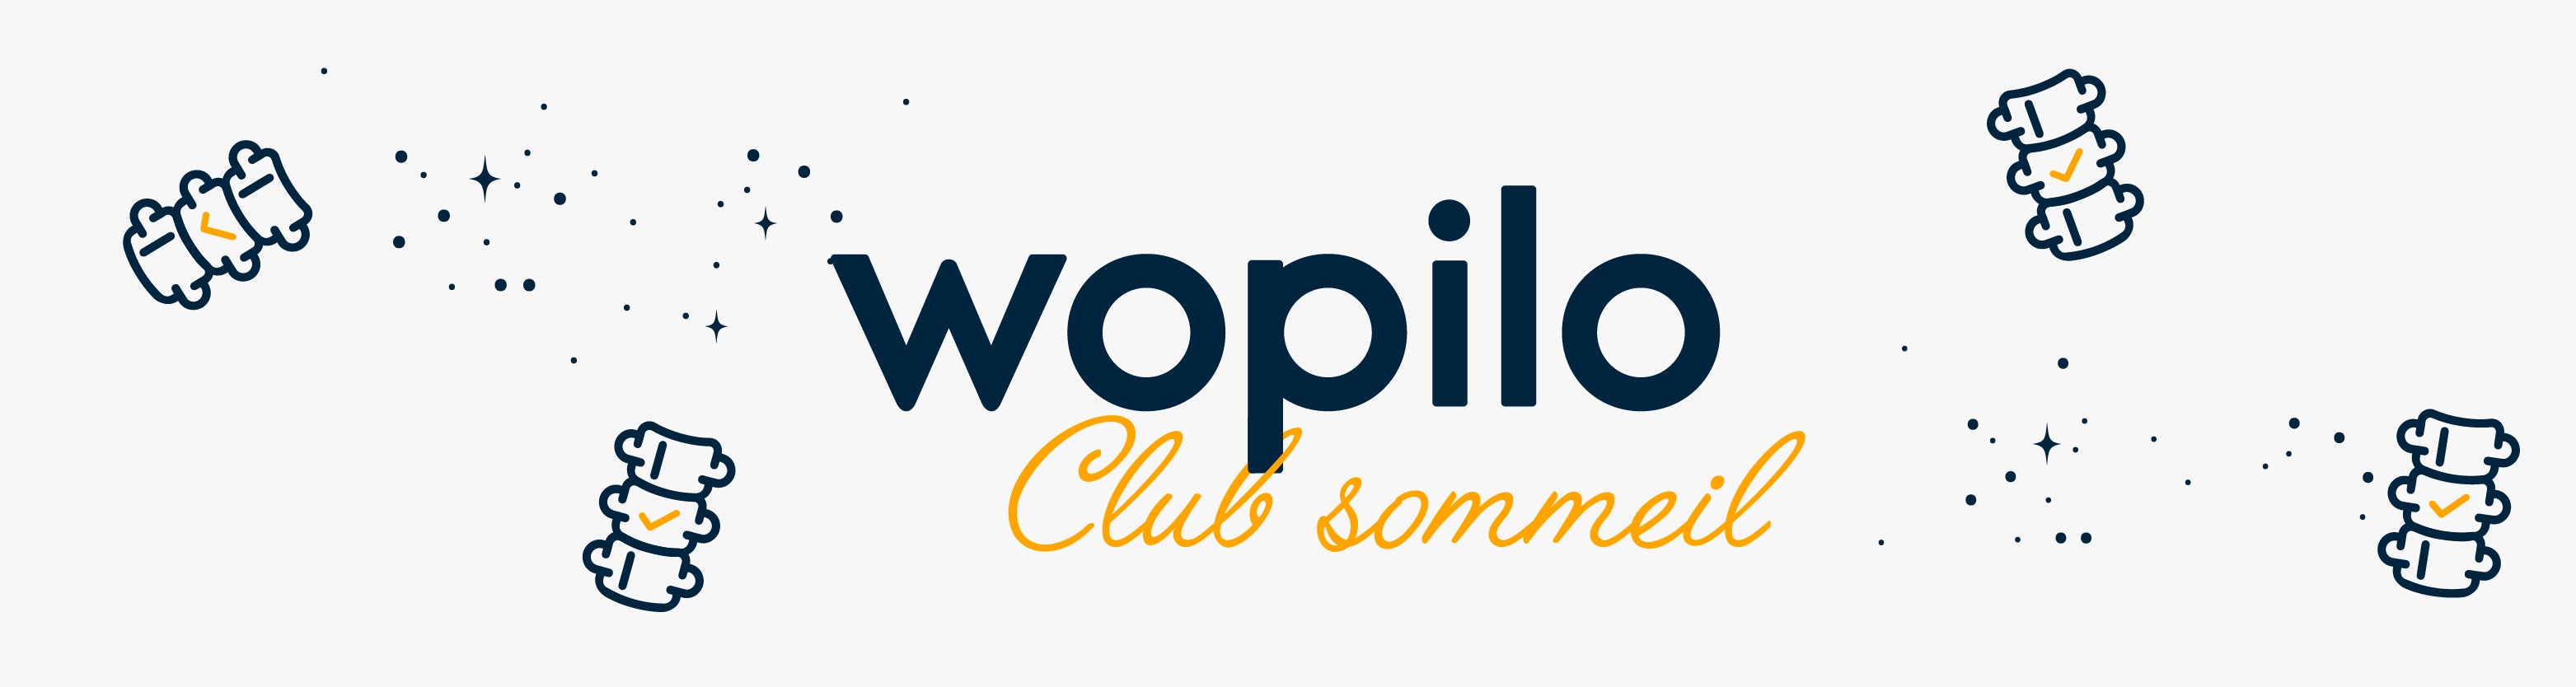 club sommeil wopilo